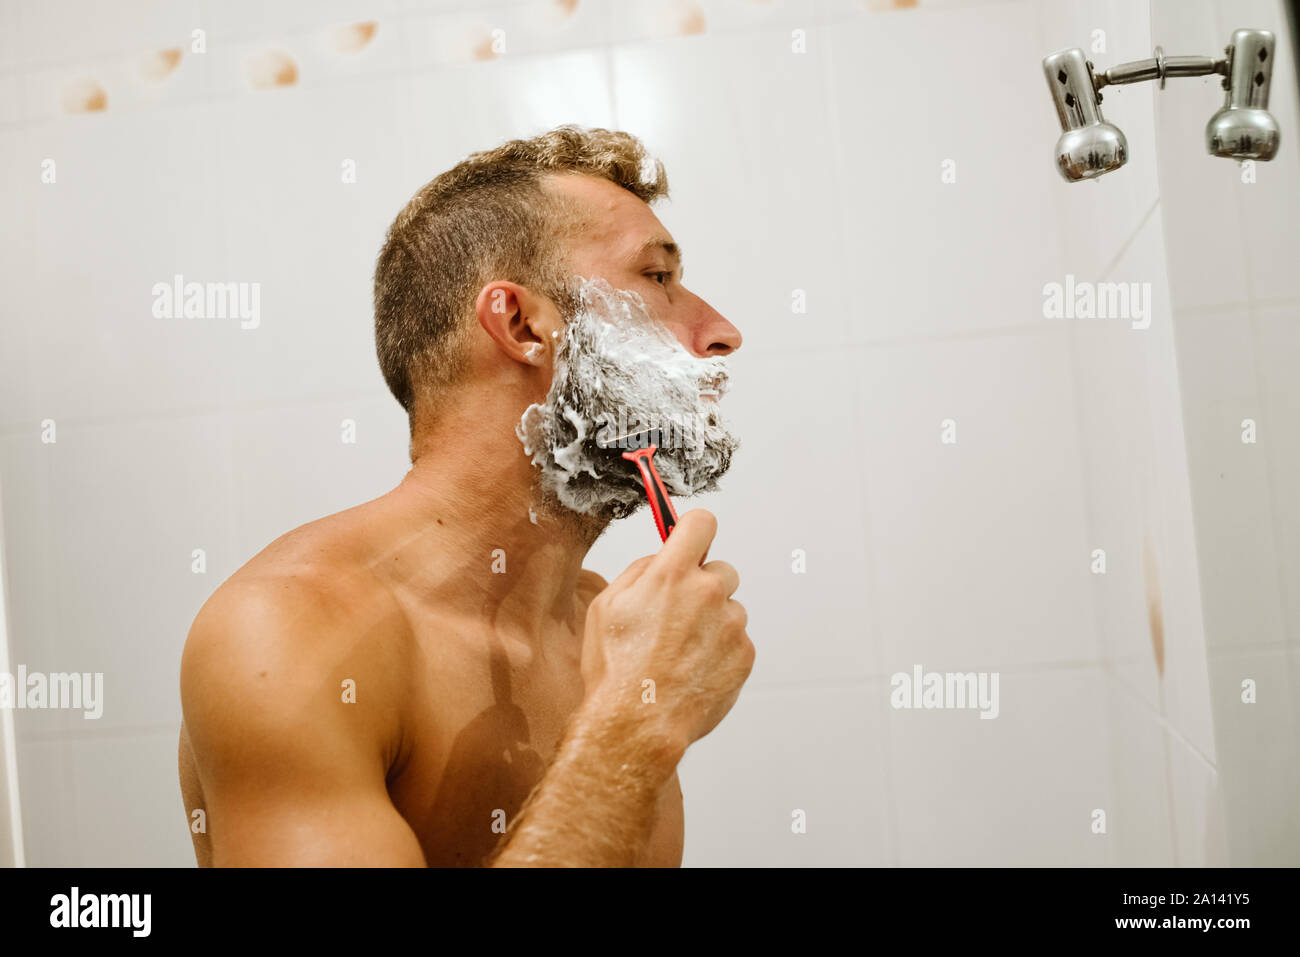 Man shaving face in bathroom mirror Stock Photo